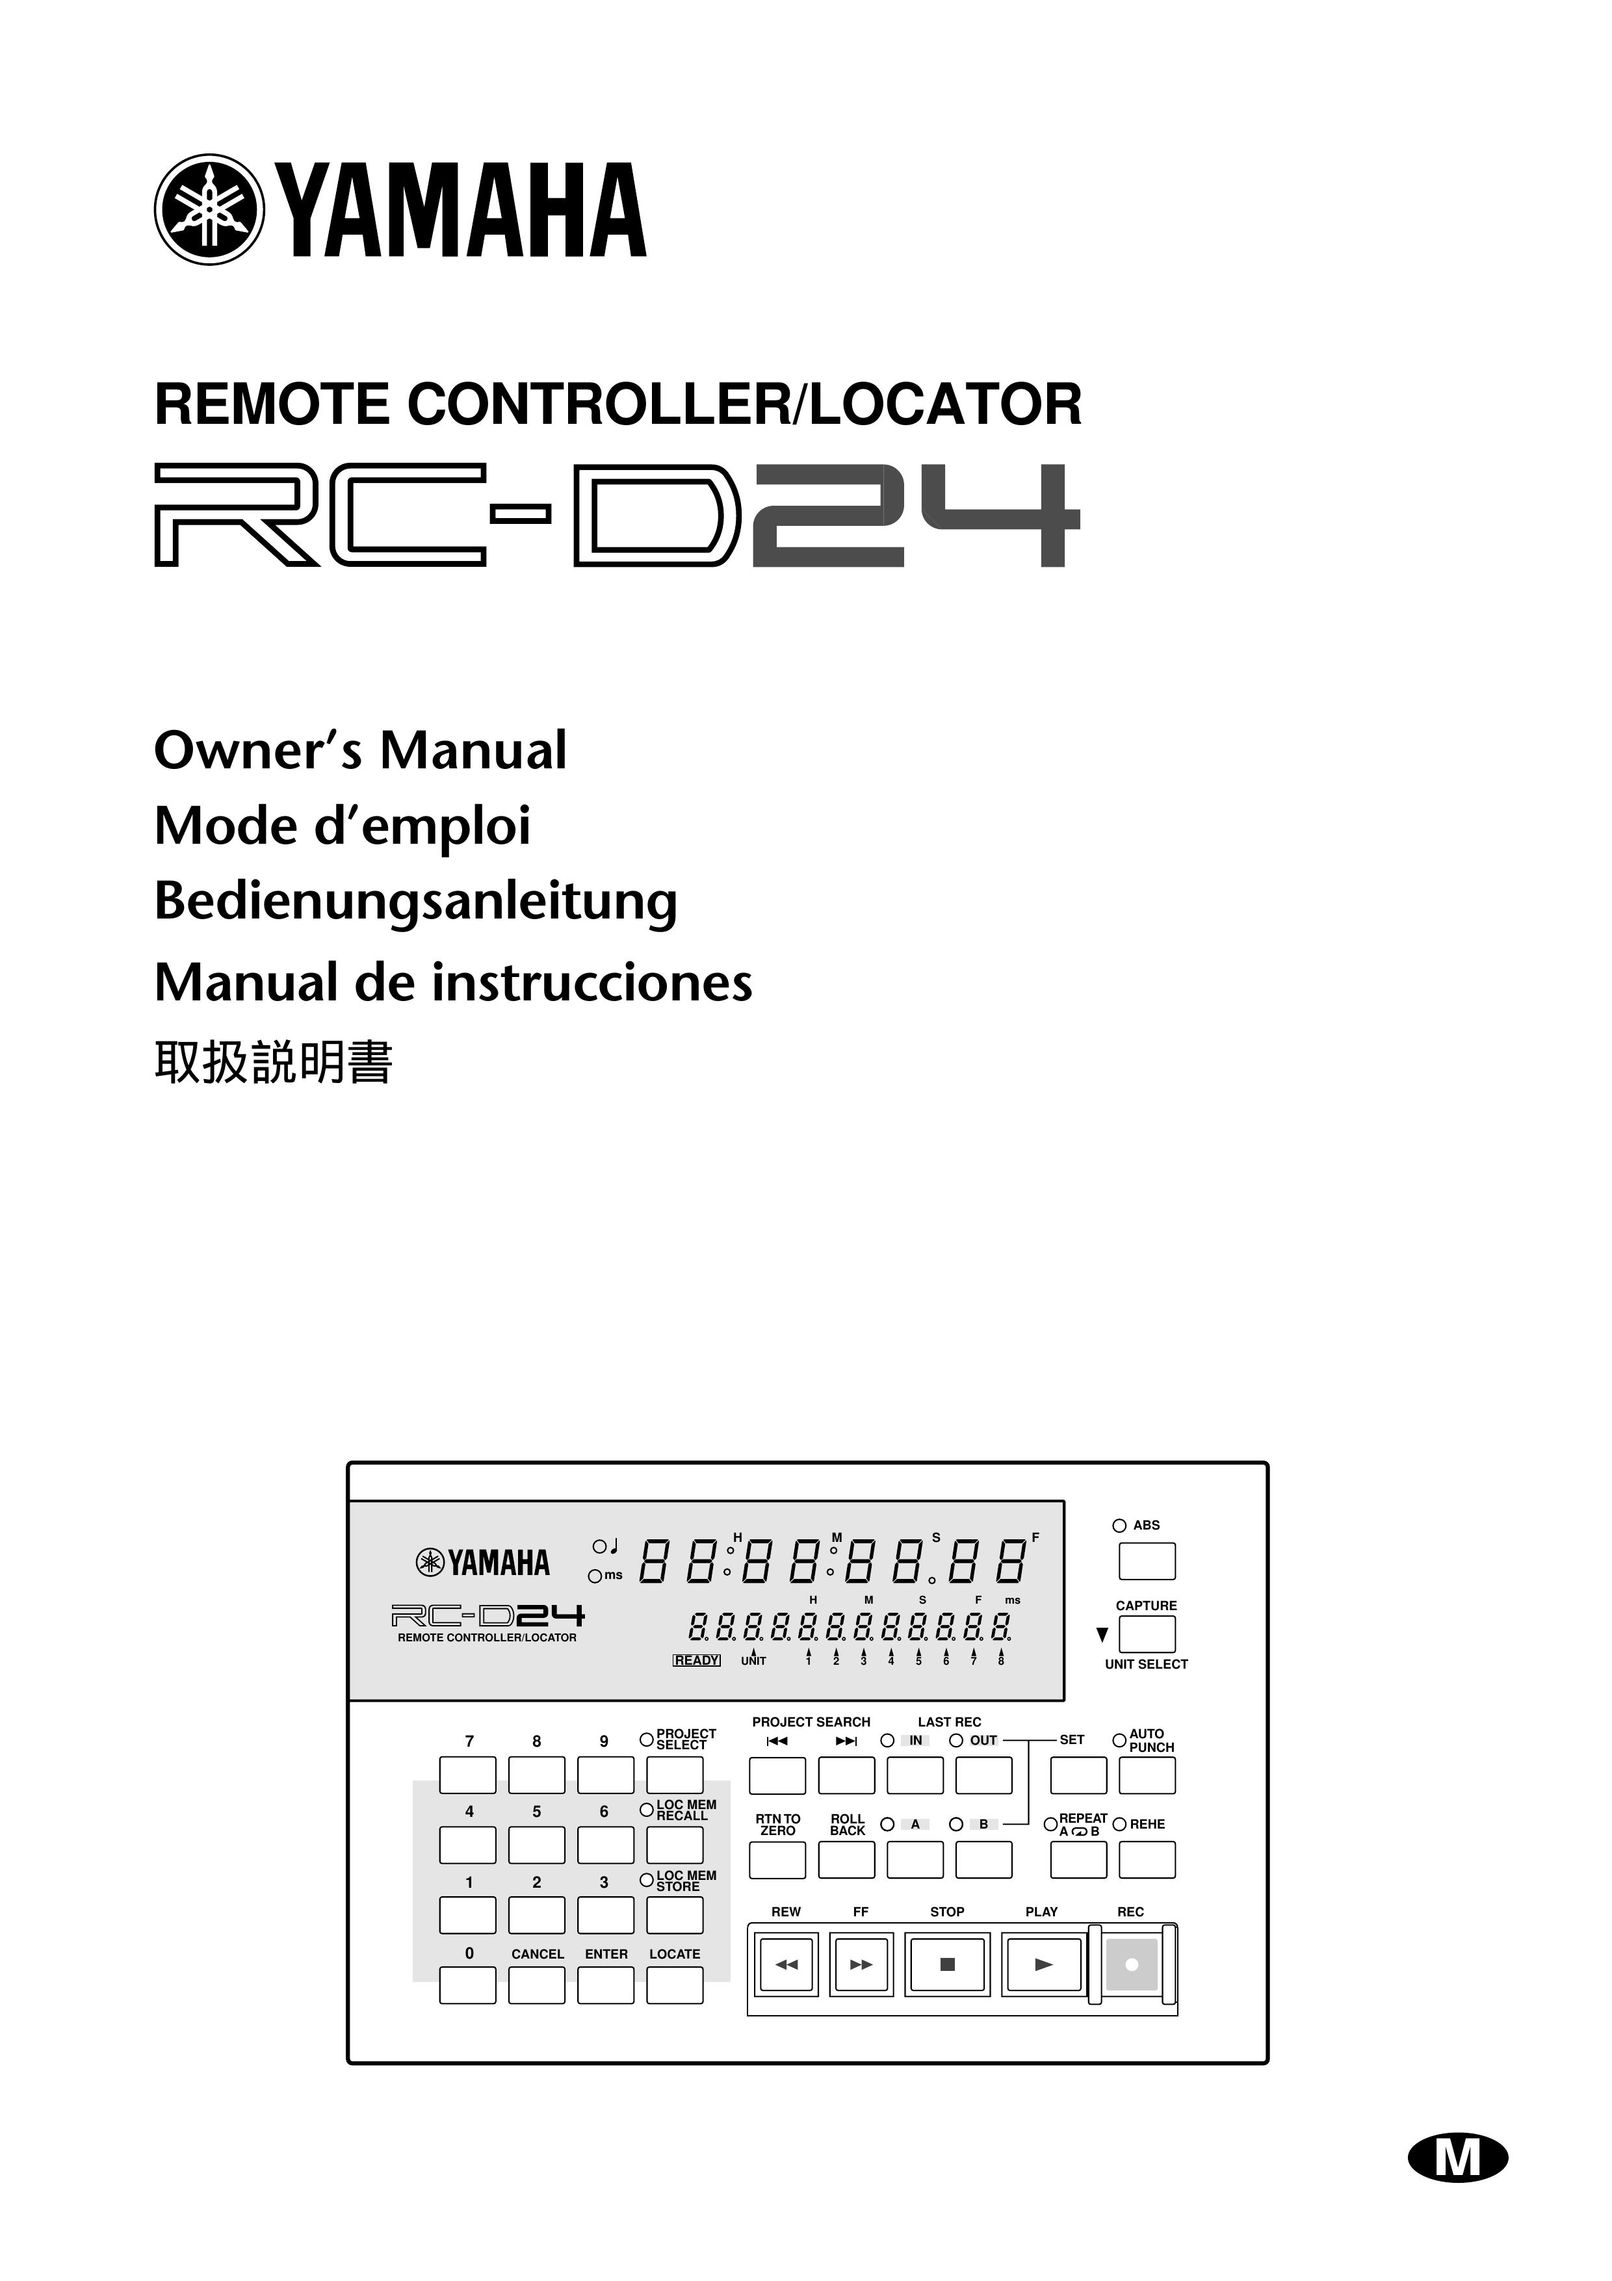 Yamaha RC-D24 Universal Remote User Manual